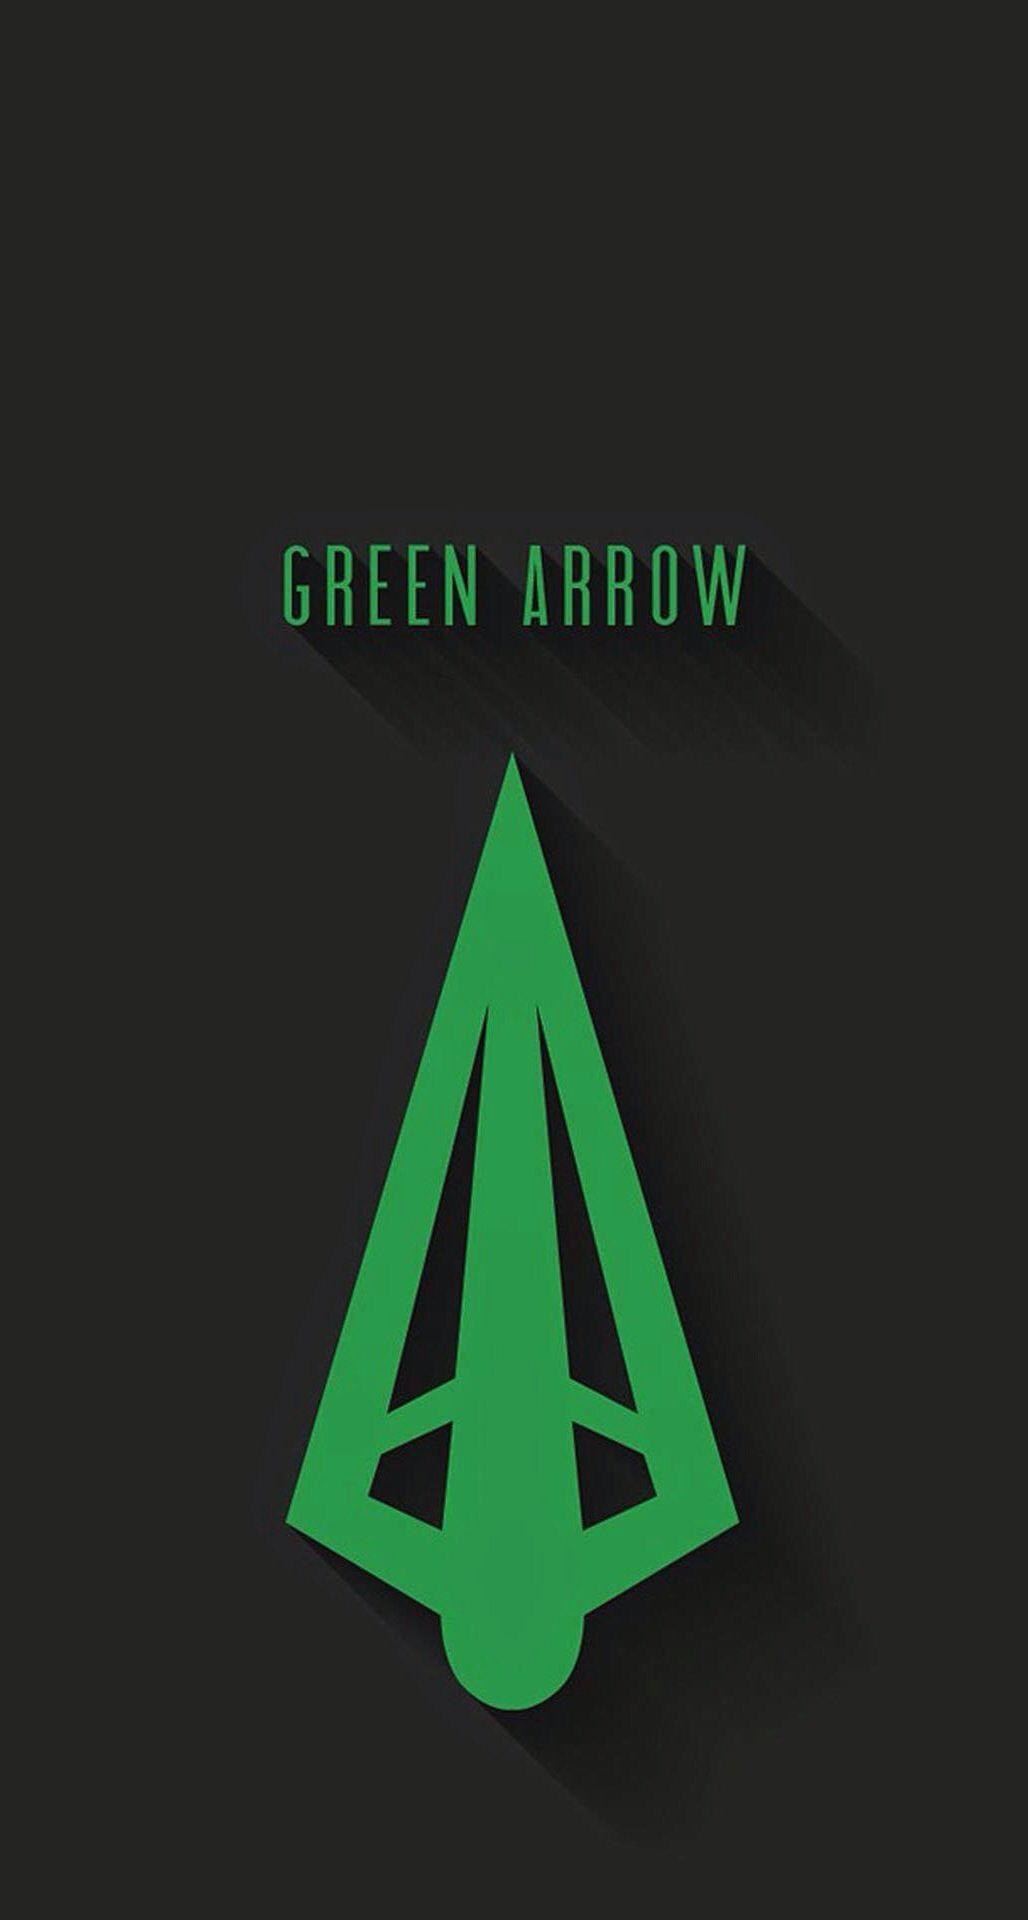 Green Flash Logo - Green Arrow icon (Would make a cool Tattoo!). DC